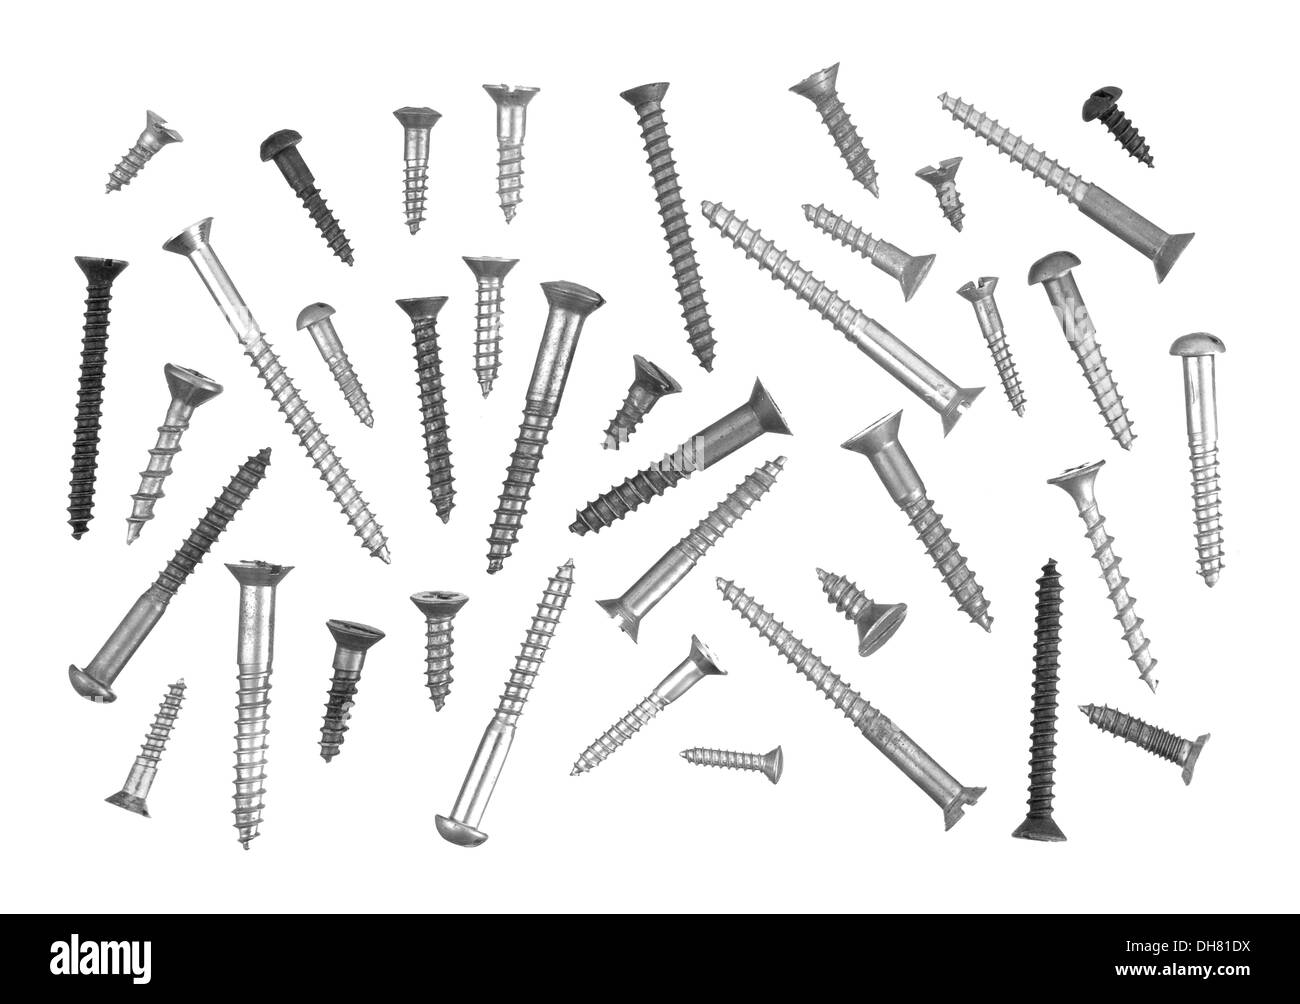 all types of screws